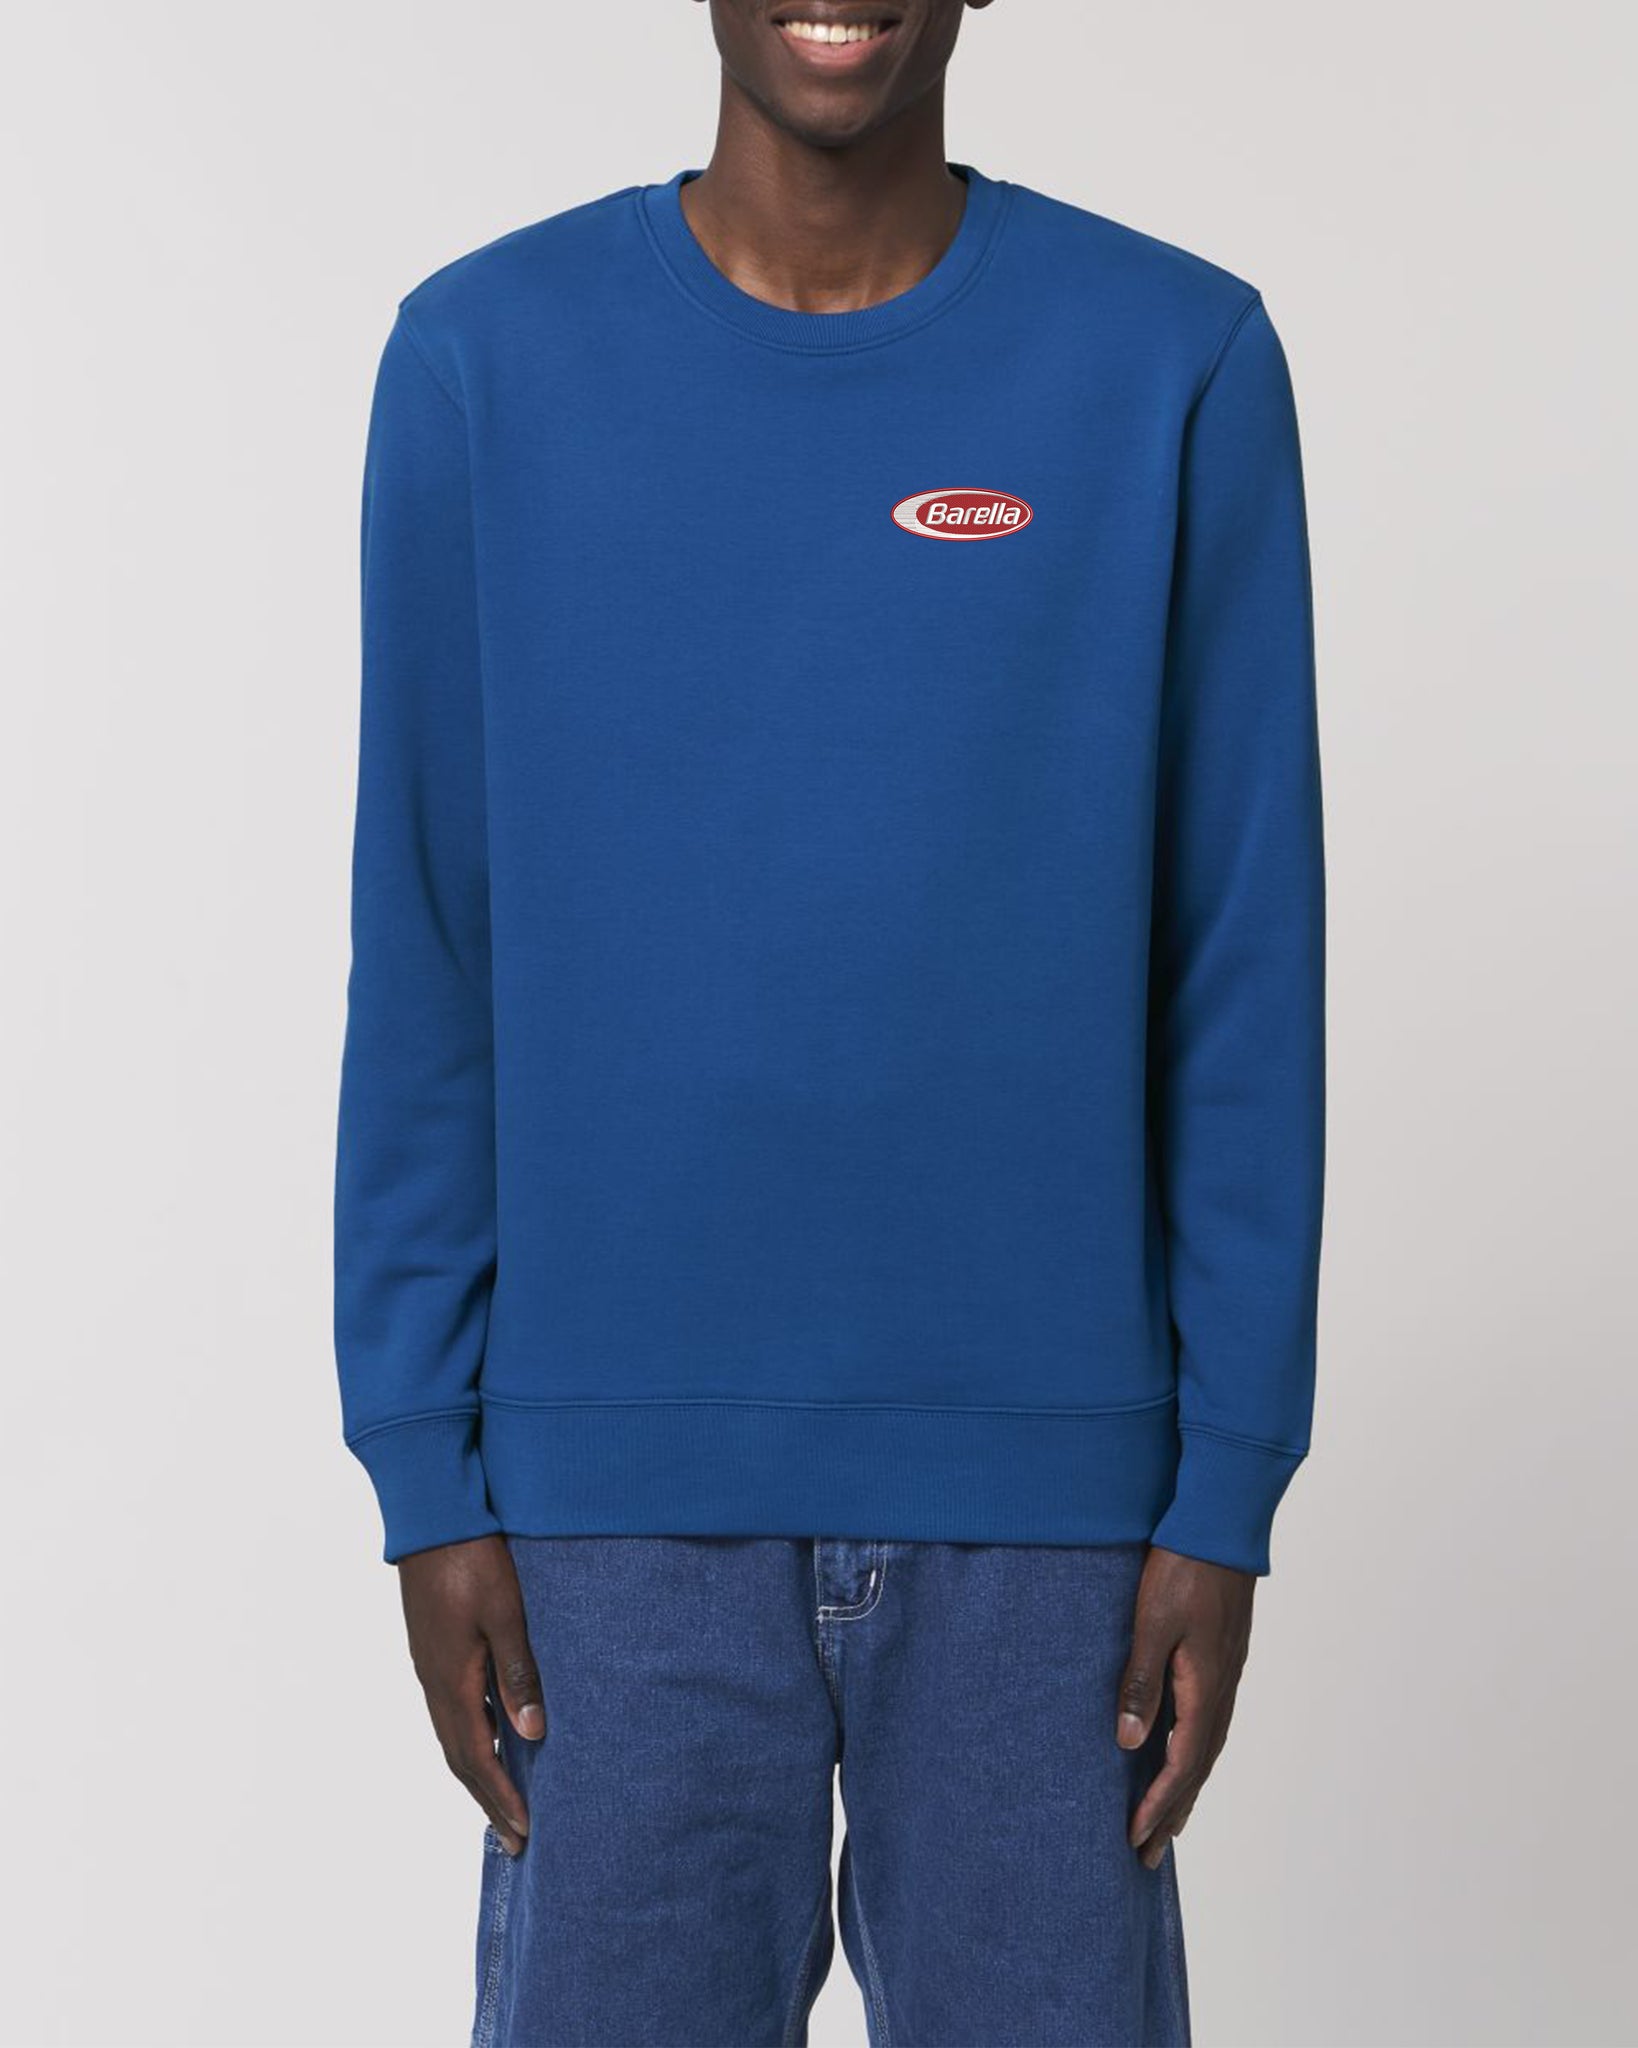 Barella sweatshirt 🍝 embroidered